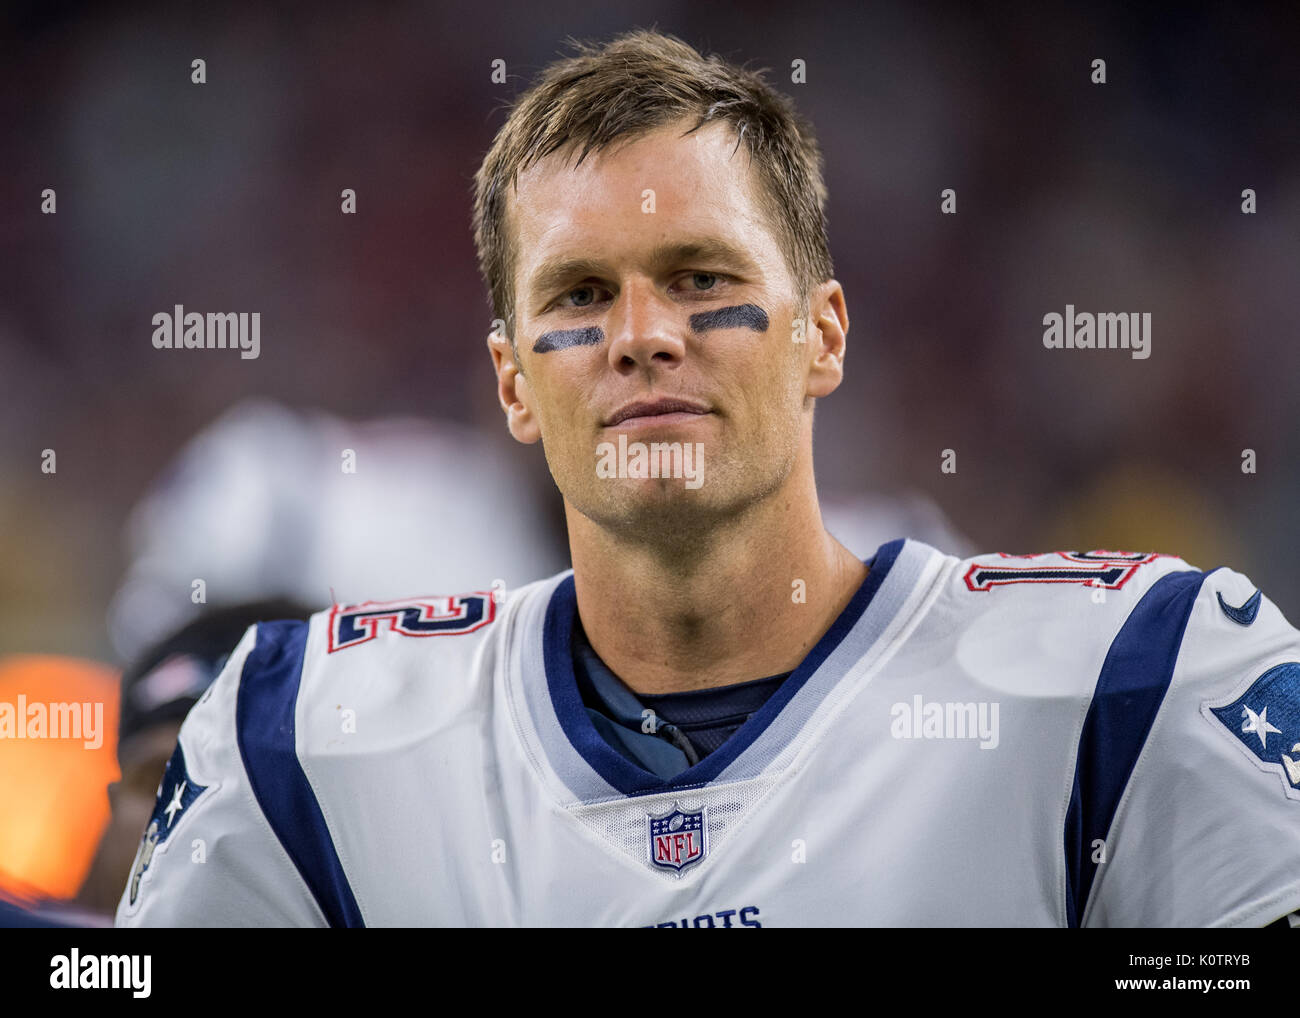 Tom Brady editorial image. Image of sports, england, football - 76343870